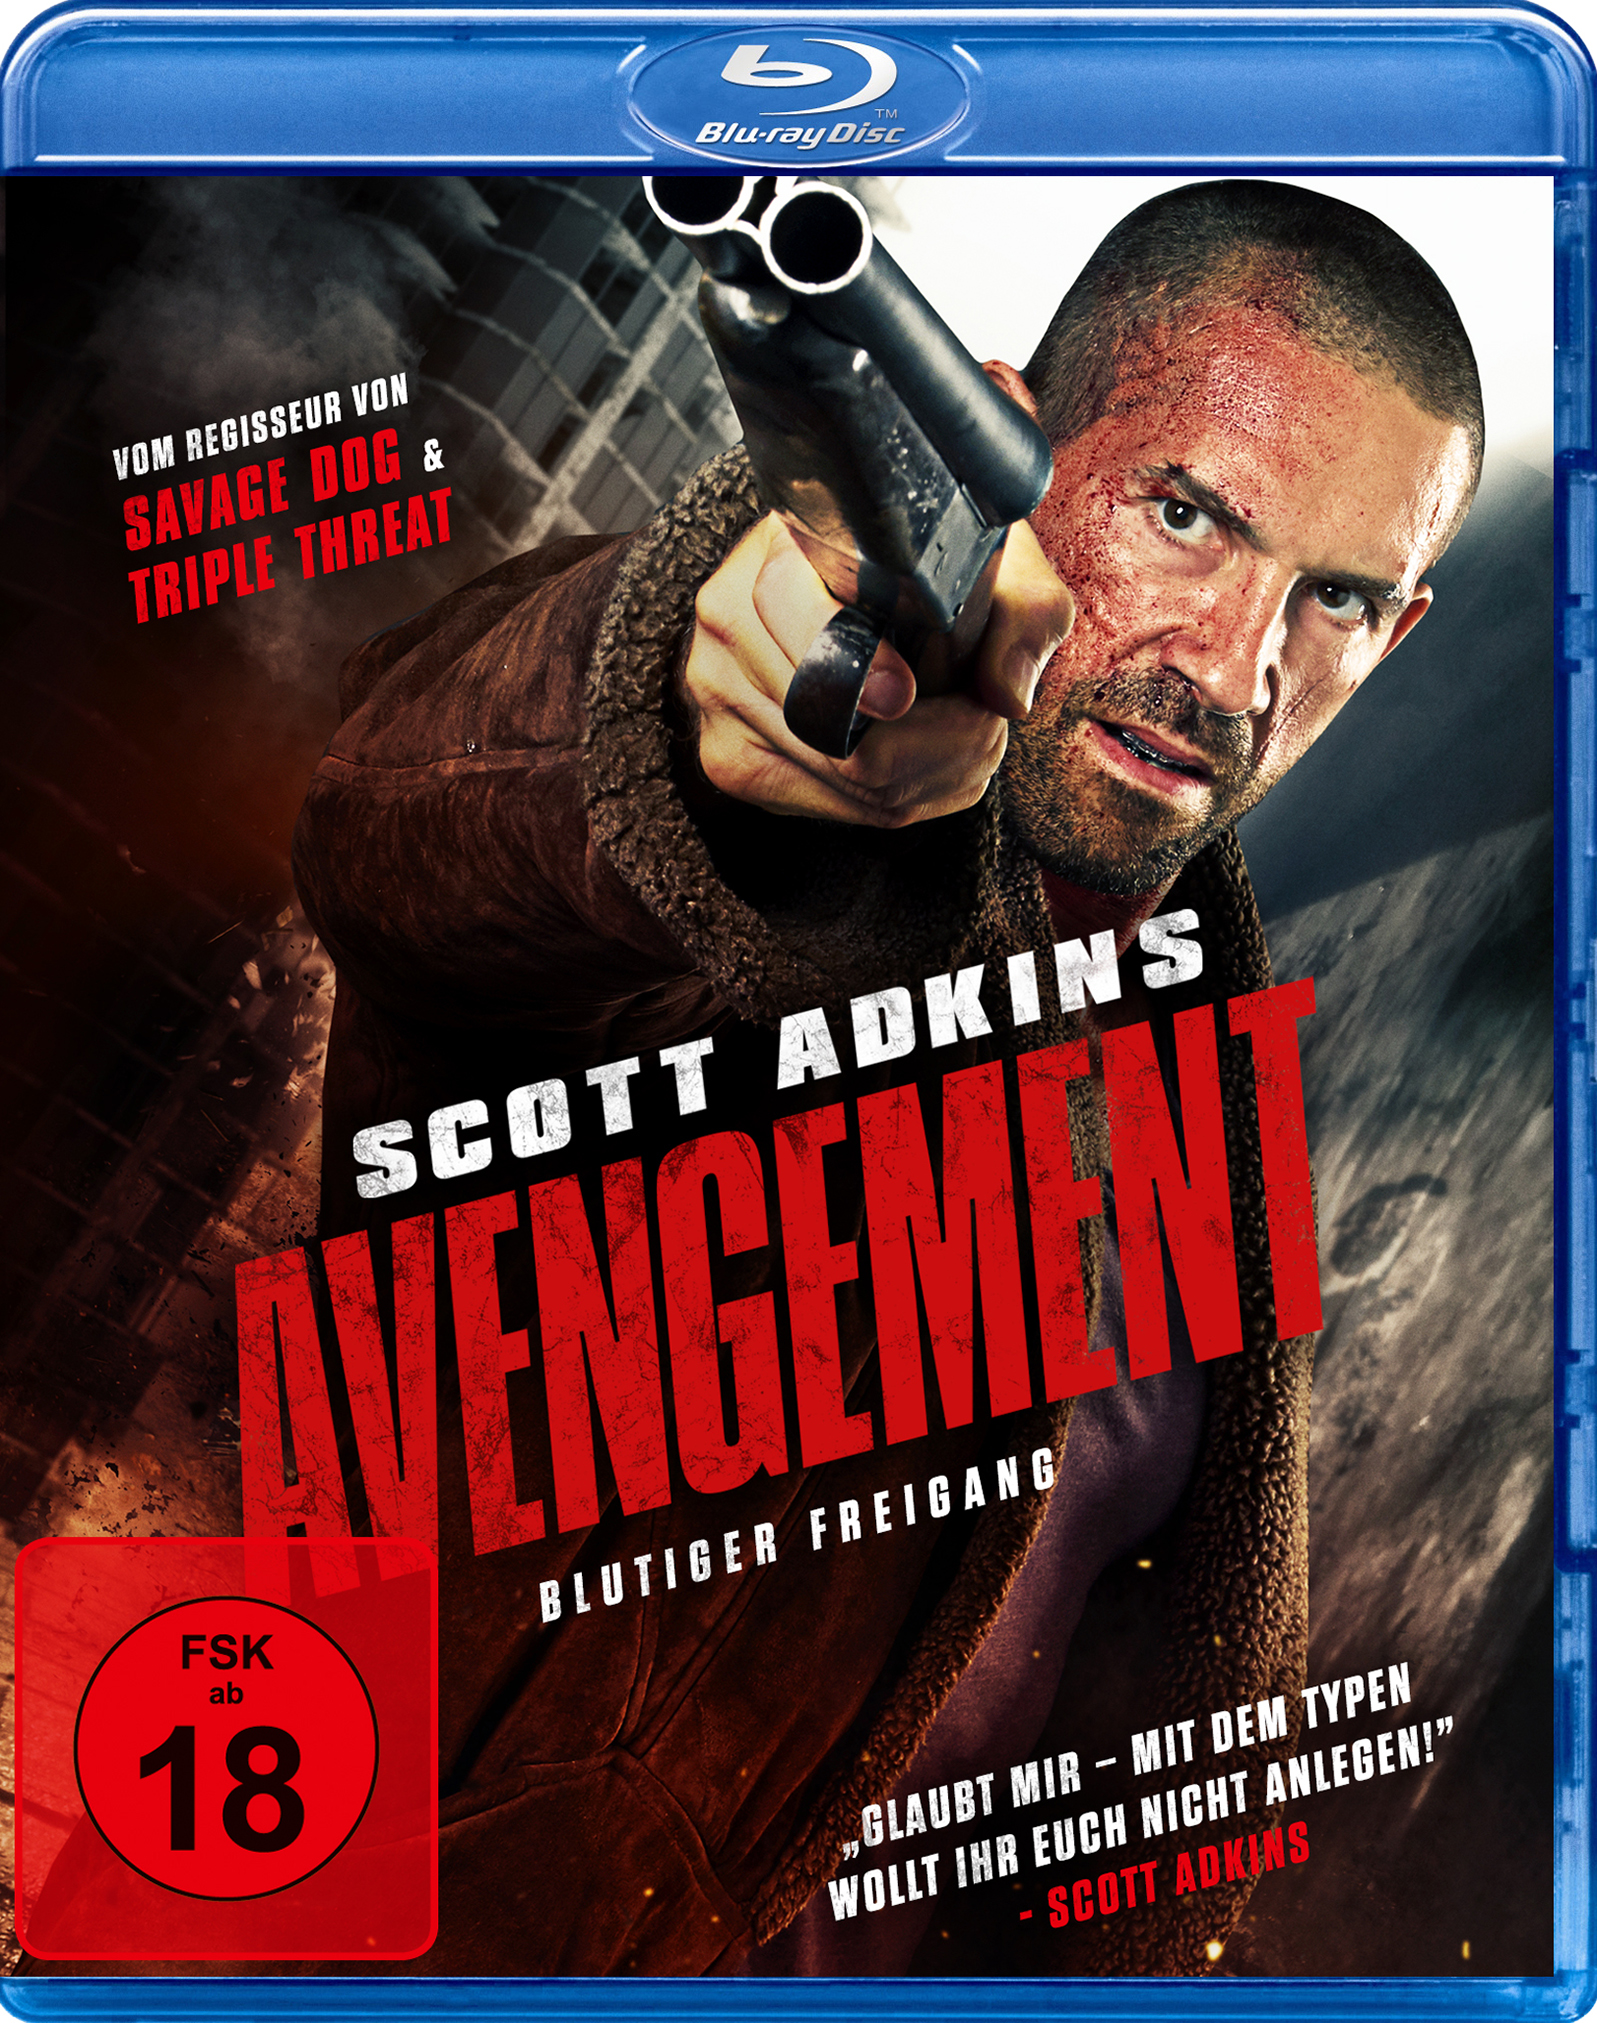 Avengement (Blu-ray) 